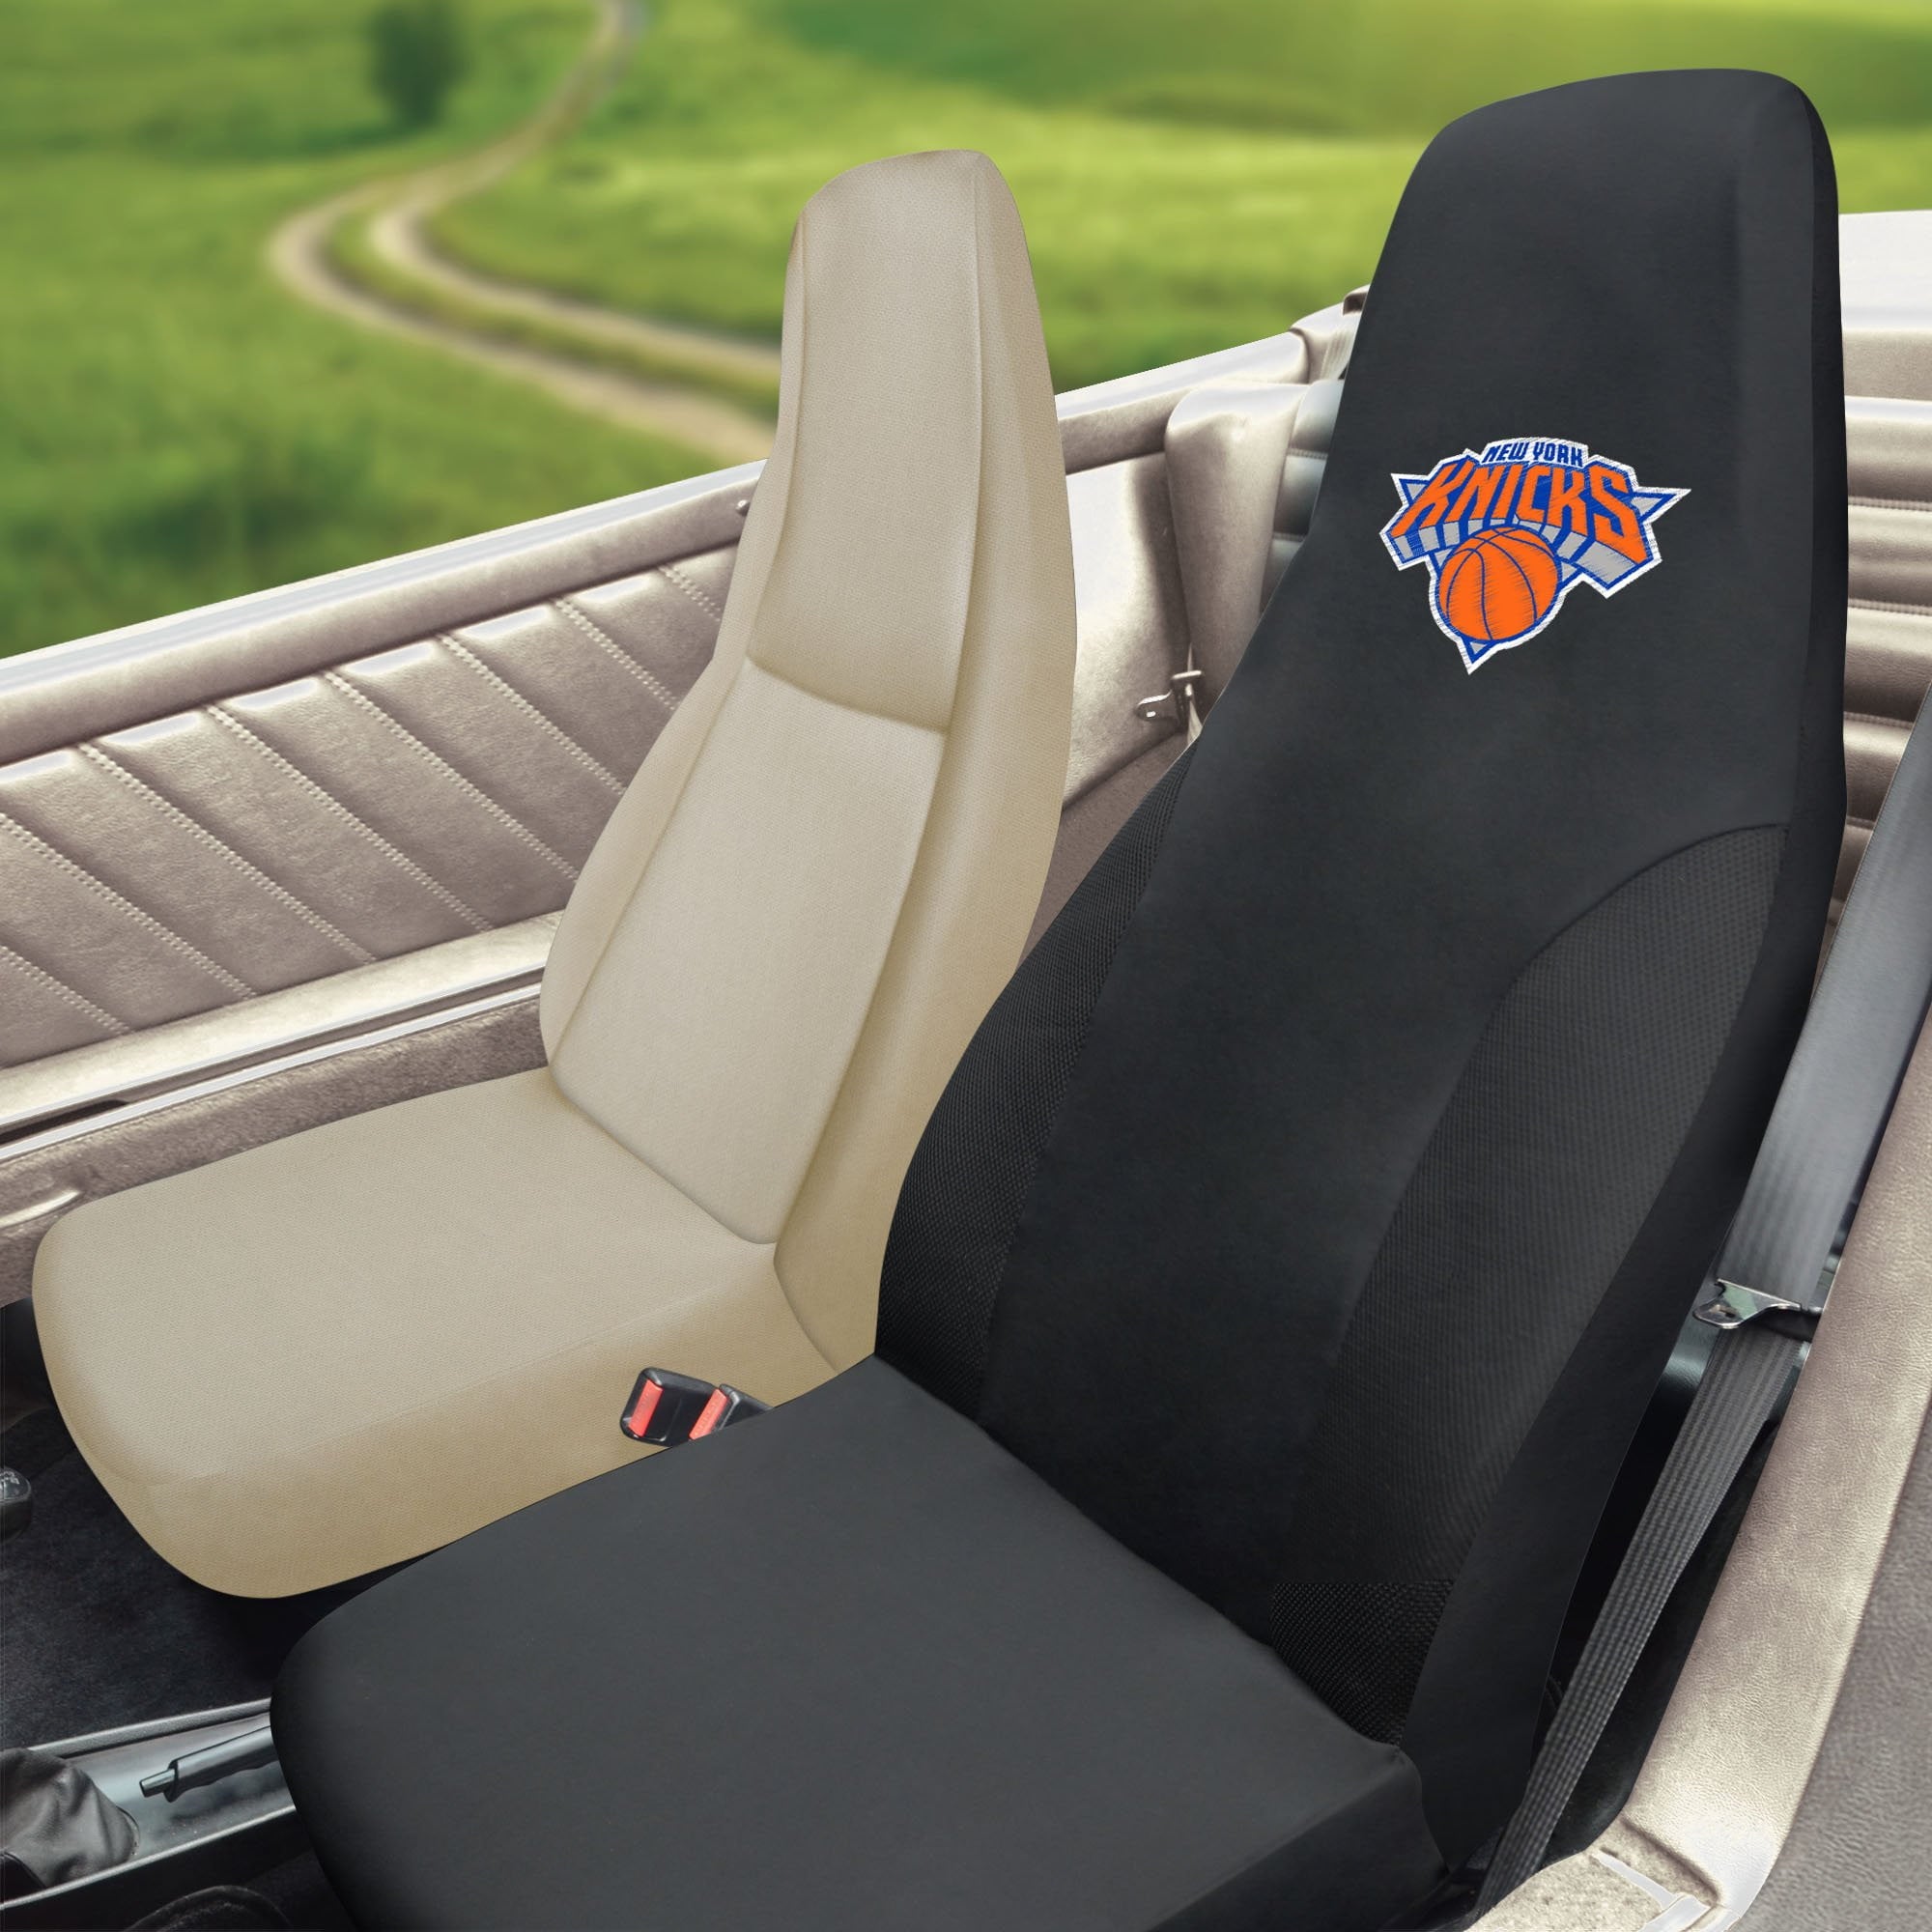 NBA - New York Knicks Set of 2 Car Seat Covers